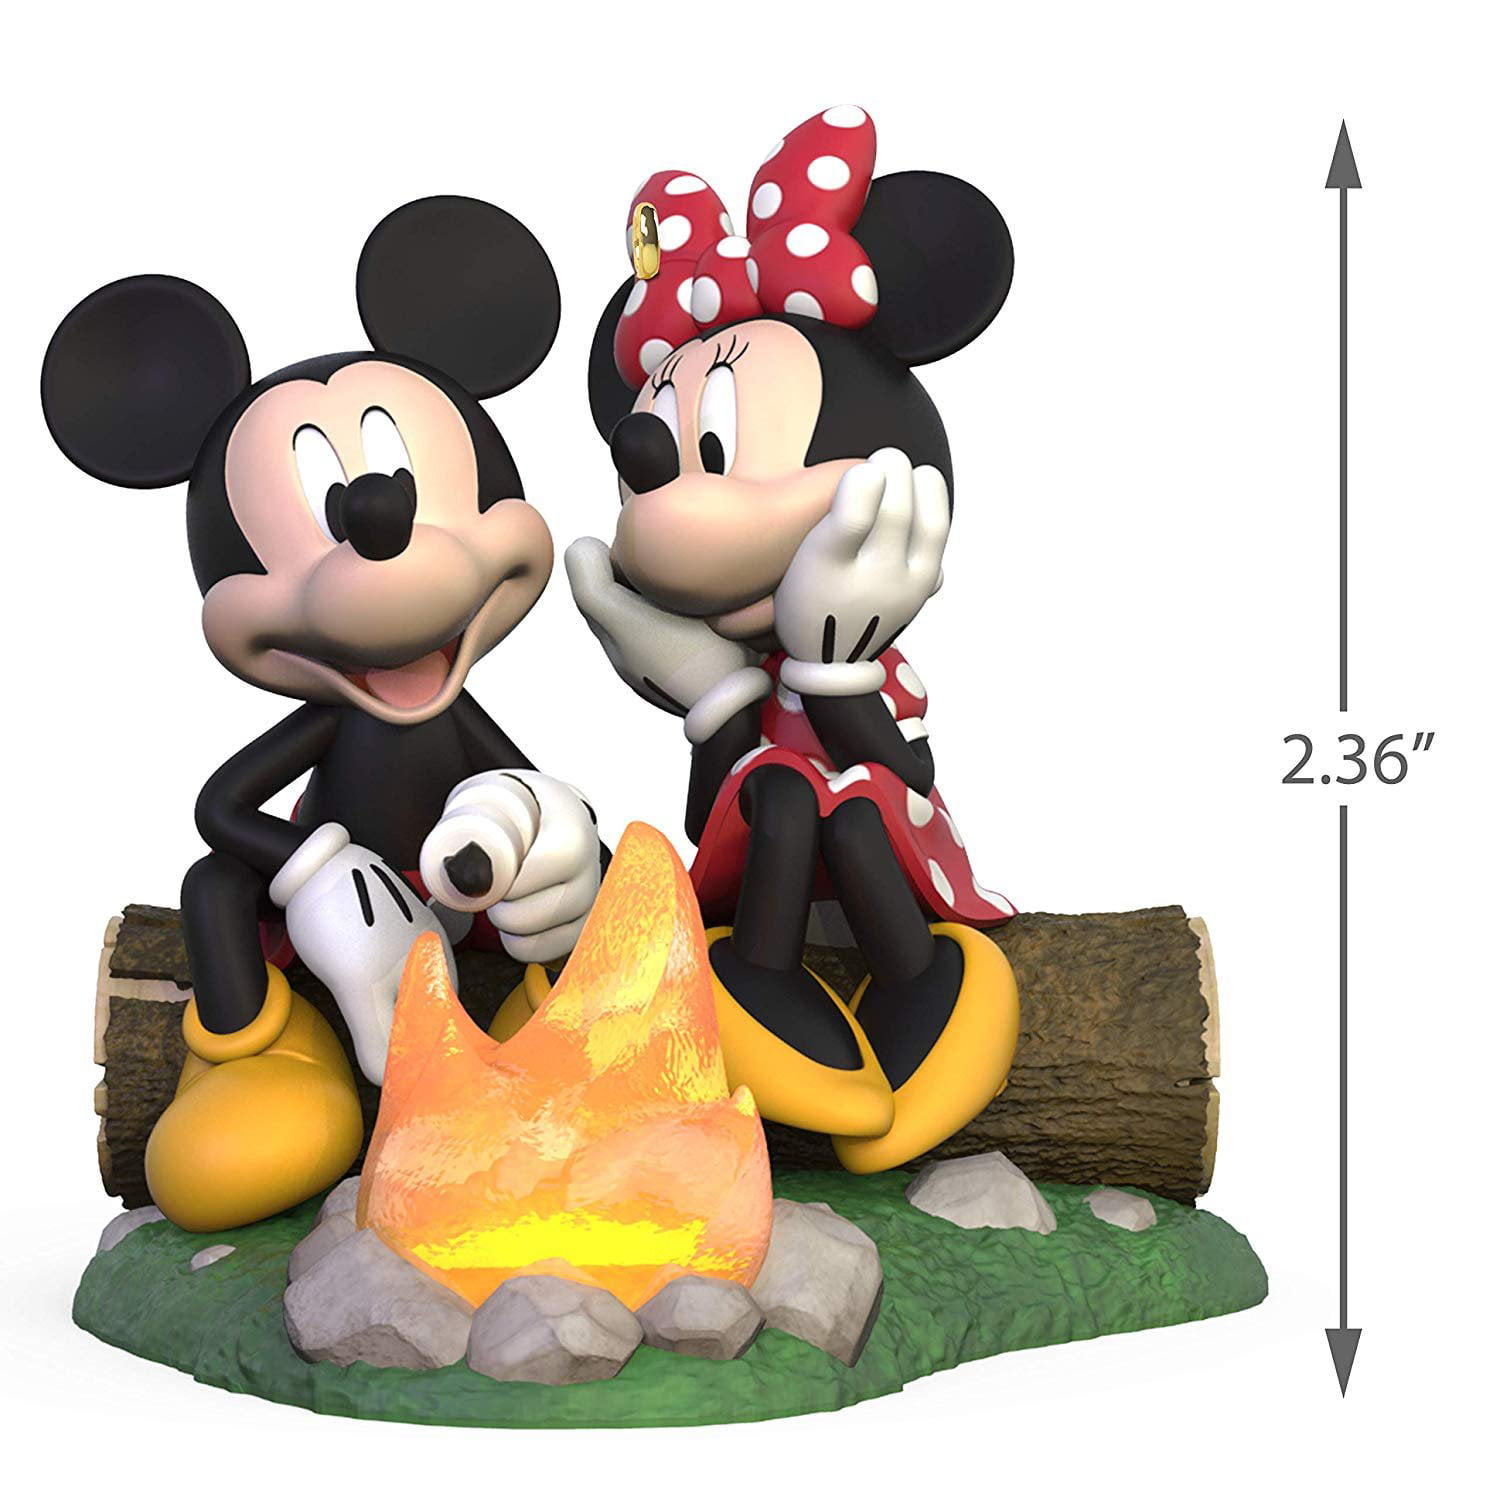 New Hallmark Disney Mickey Mouse 2019 Year Dated Christmas Ornament